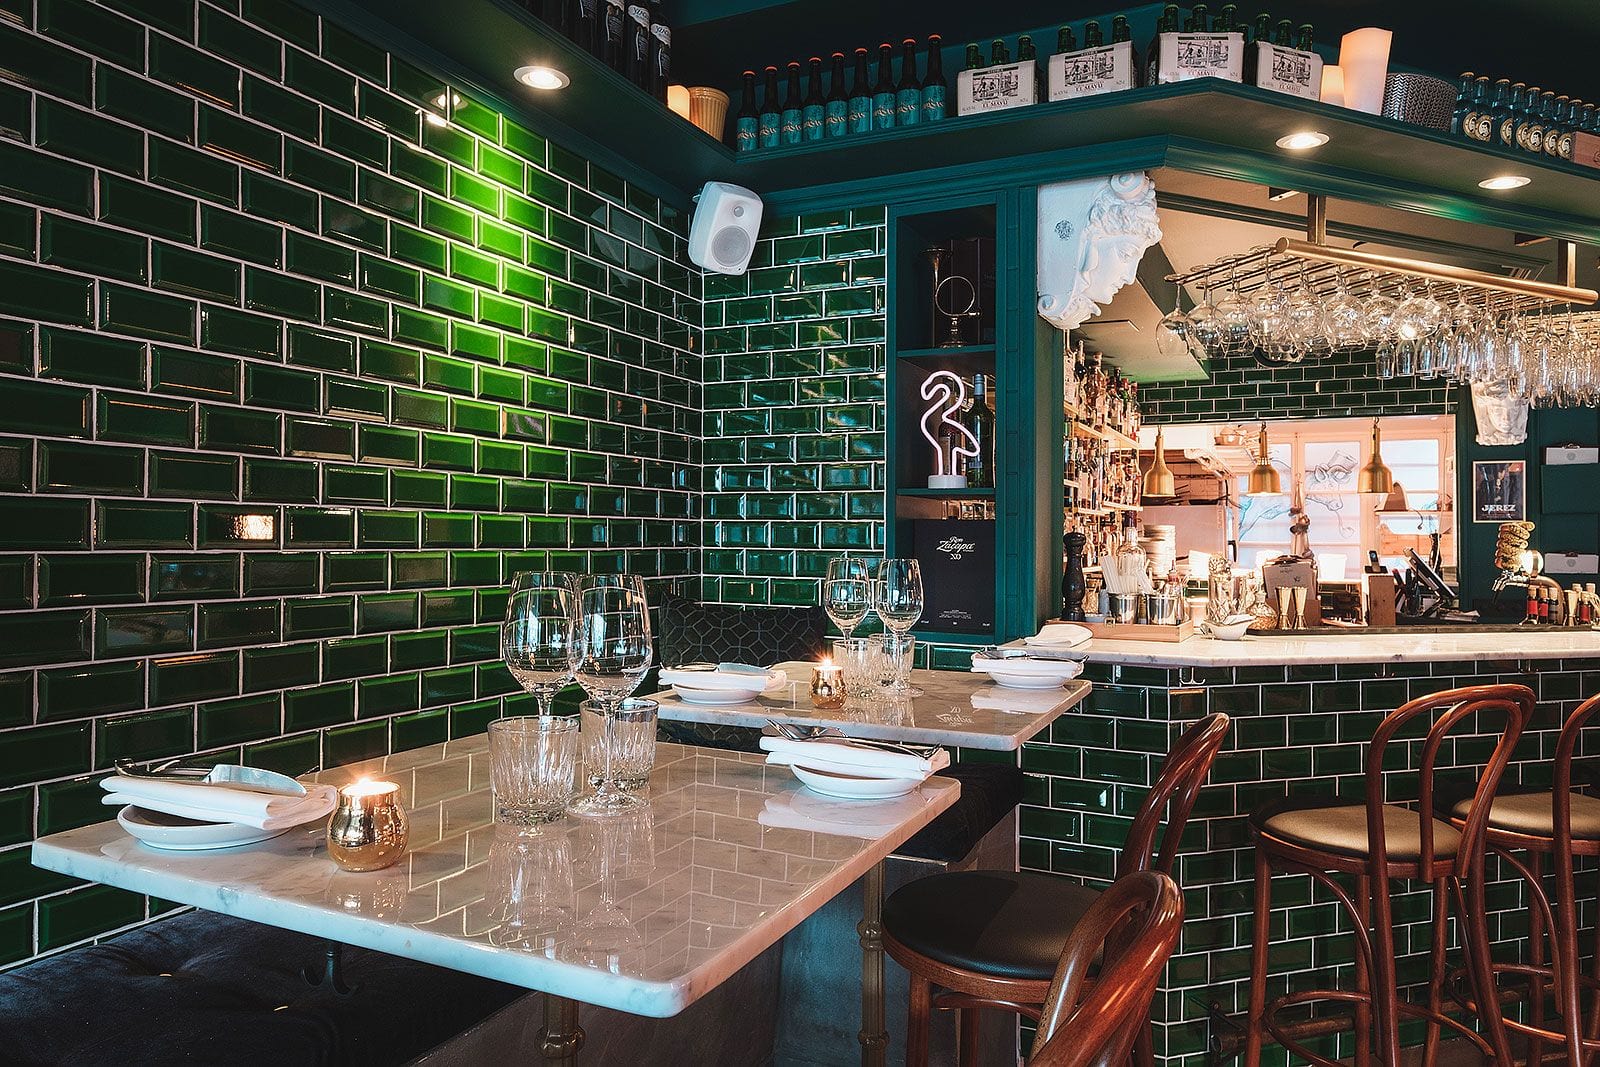 Las Brasas – The hottest restaurants right now